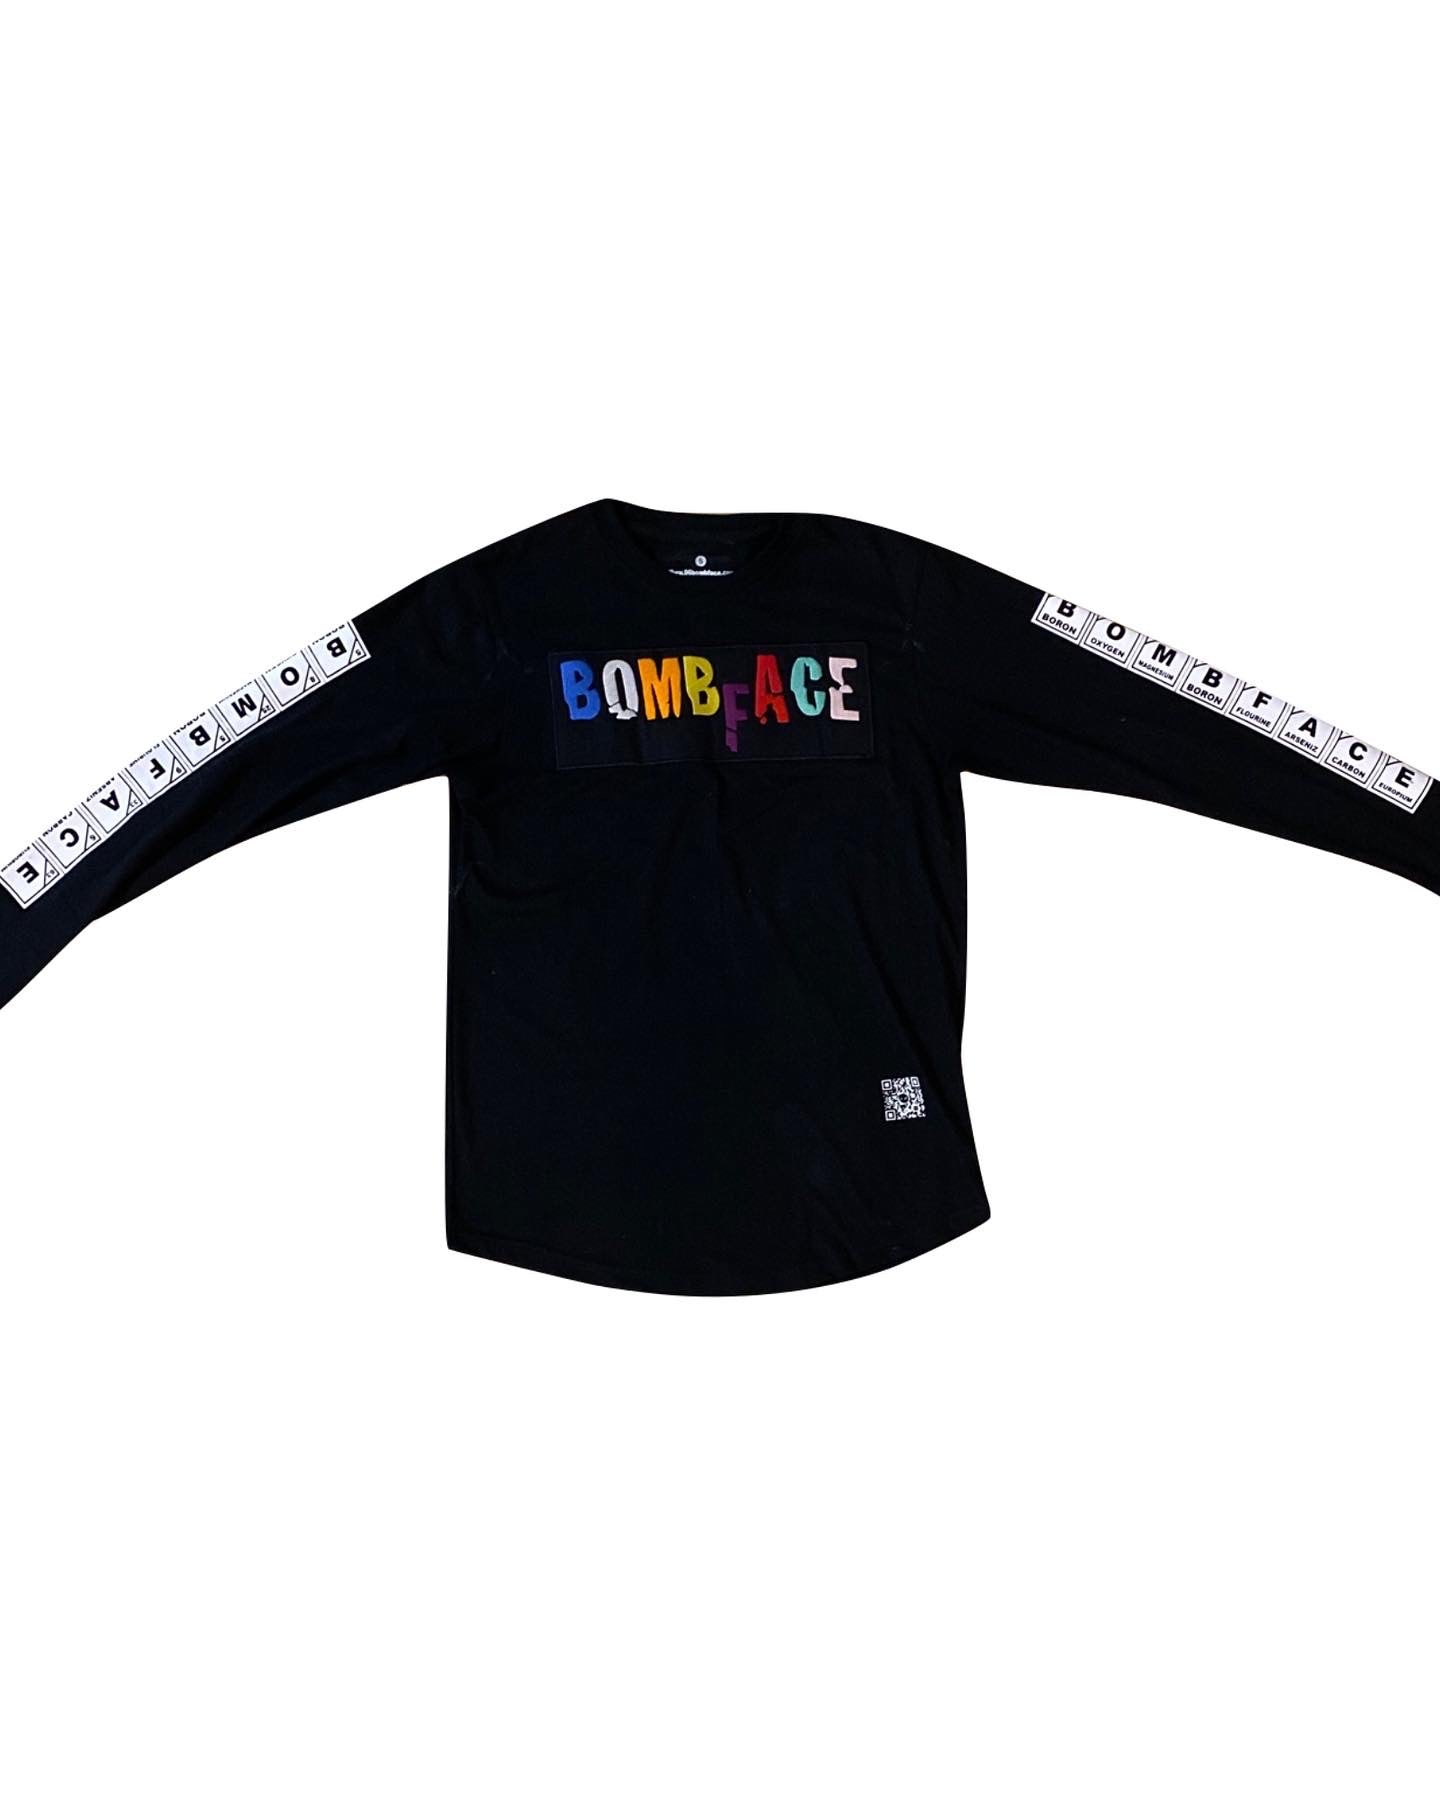 Black long sleeve t-shirt, t-shirt, streetwear shirt, black heavy cotton t-shirt, cotton t-shirt. BombFace Chemistry